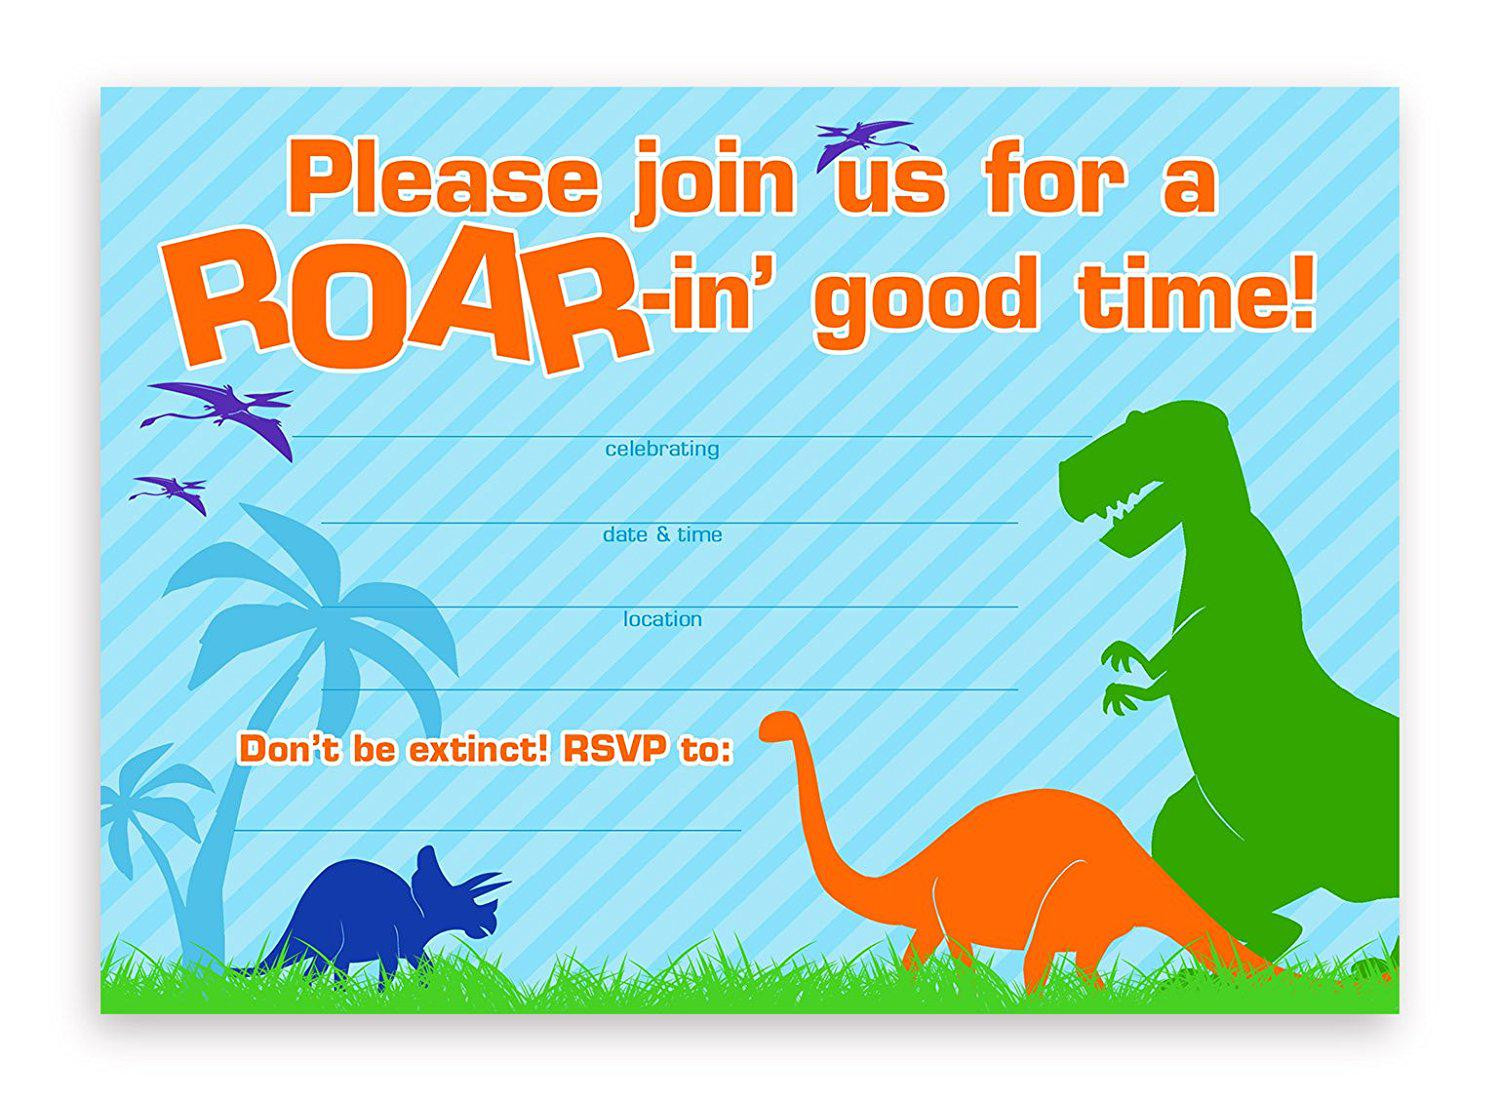 Free Printable Dinosaur Birthday Invitations
 19 Roaring Dinosaur Birthday Invitations